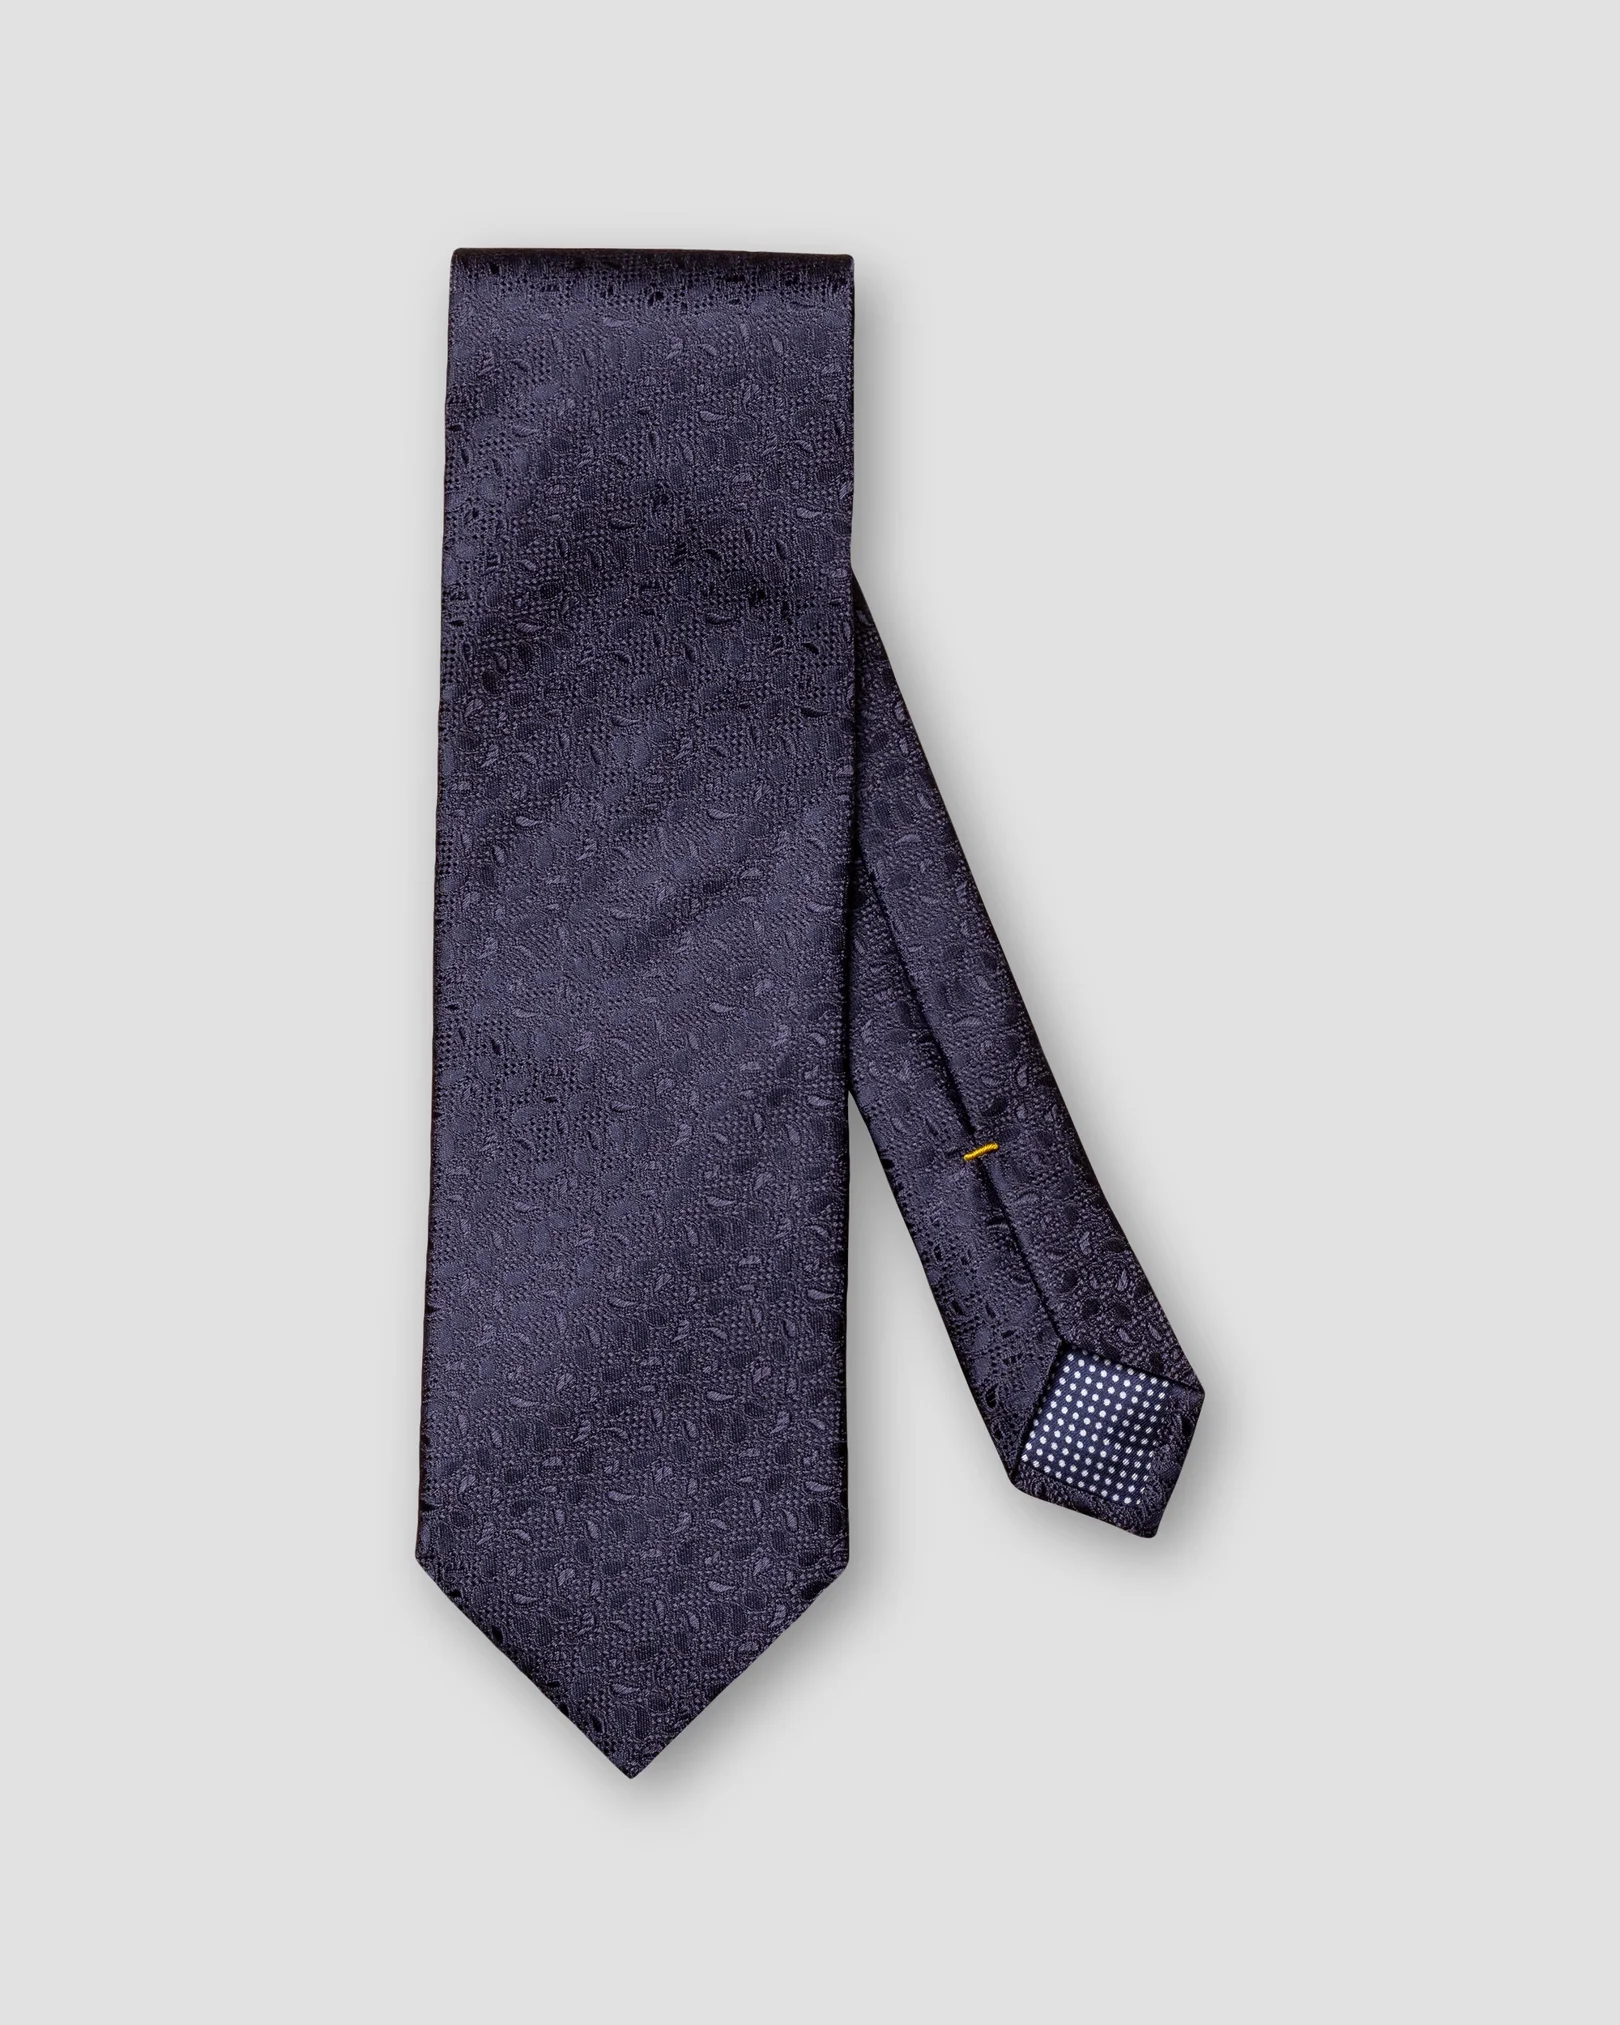 Eton - navy blue two color silk tie